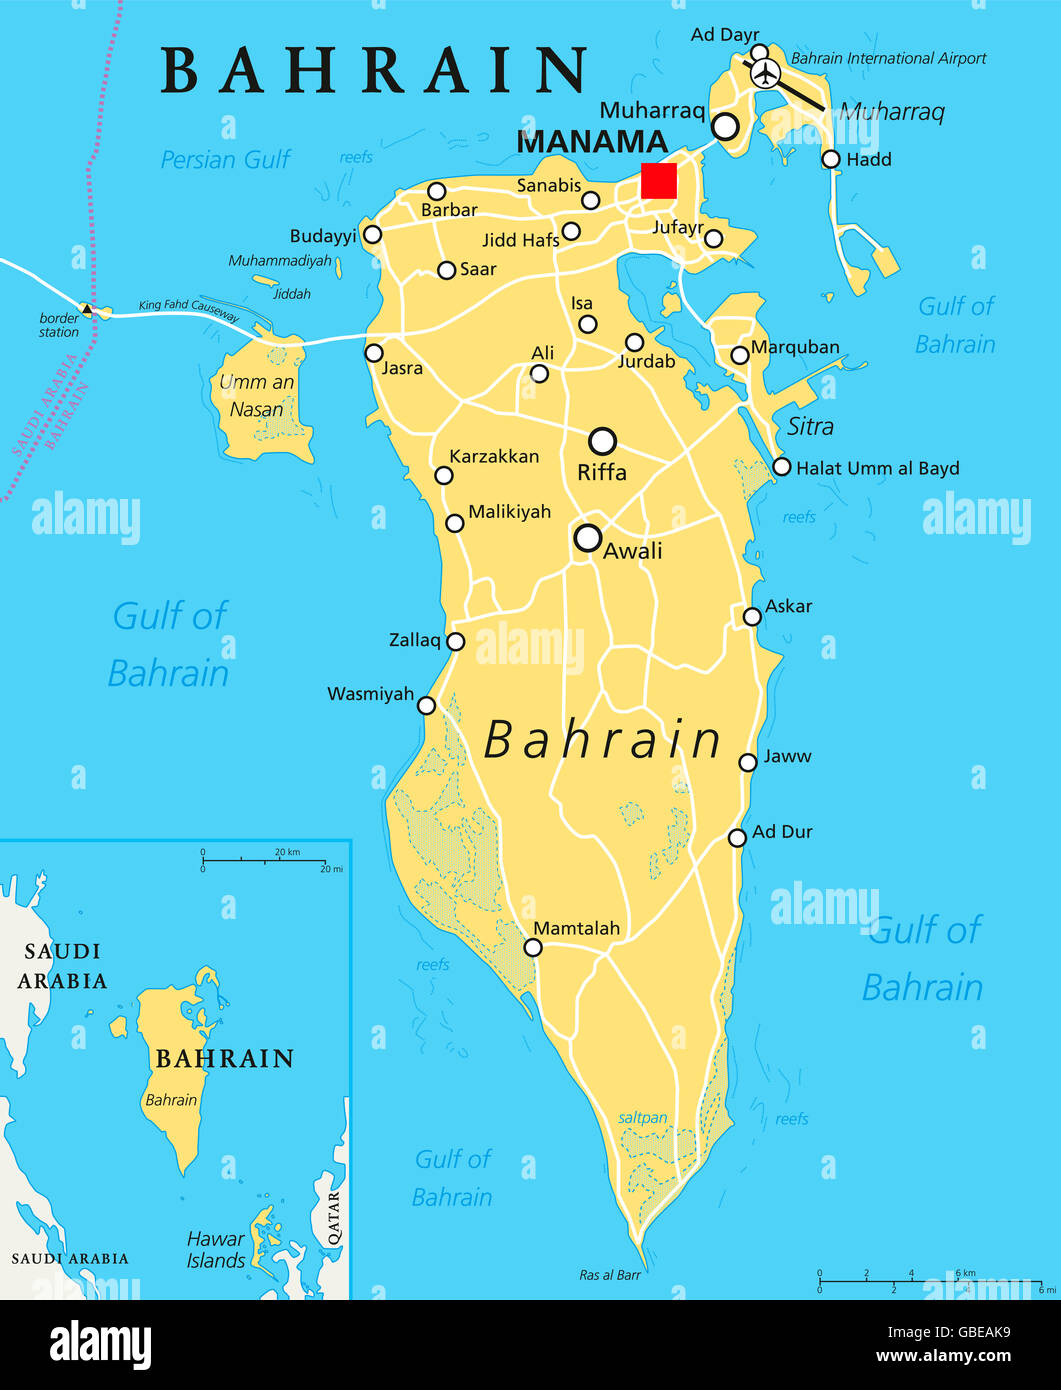 Bahrain political map with capital Manama. Island country, archipelago and kingdom near western shores of Persian Gulf. Stock Photo